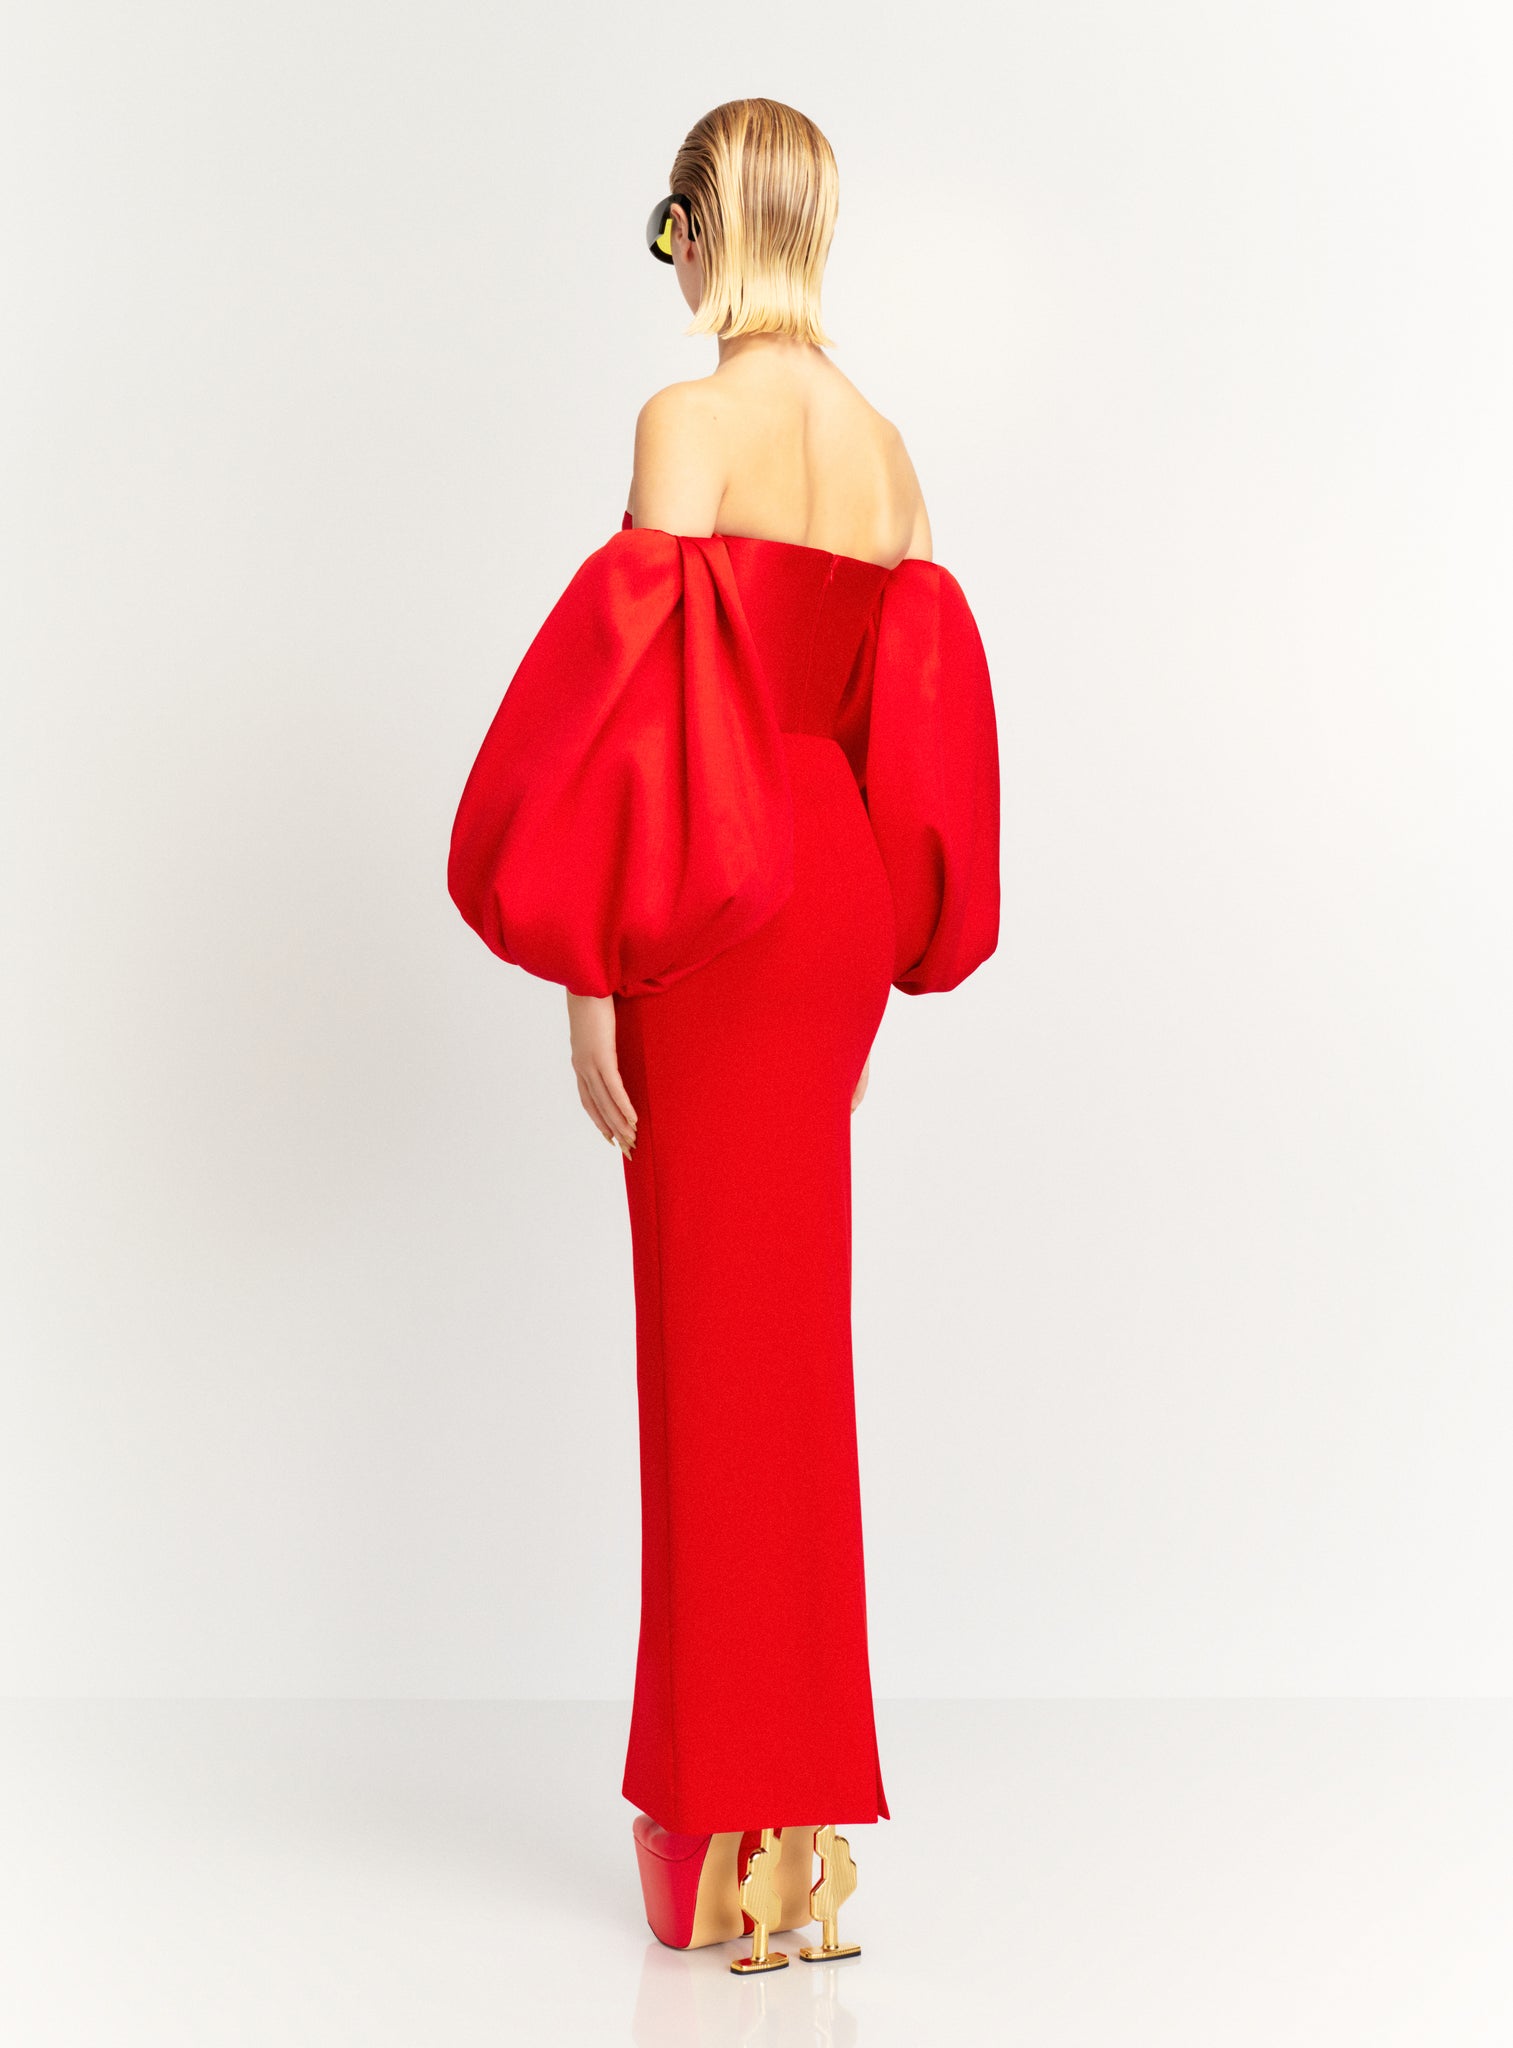 The Carmen Maxi Dress in Red